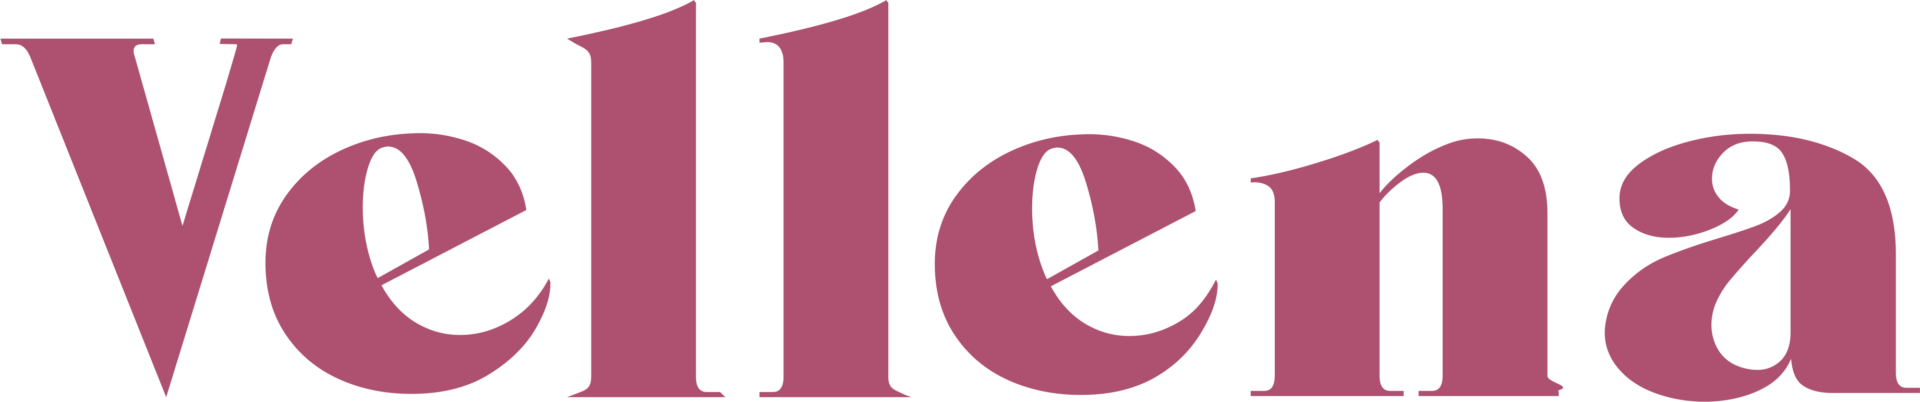 vellena_logo